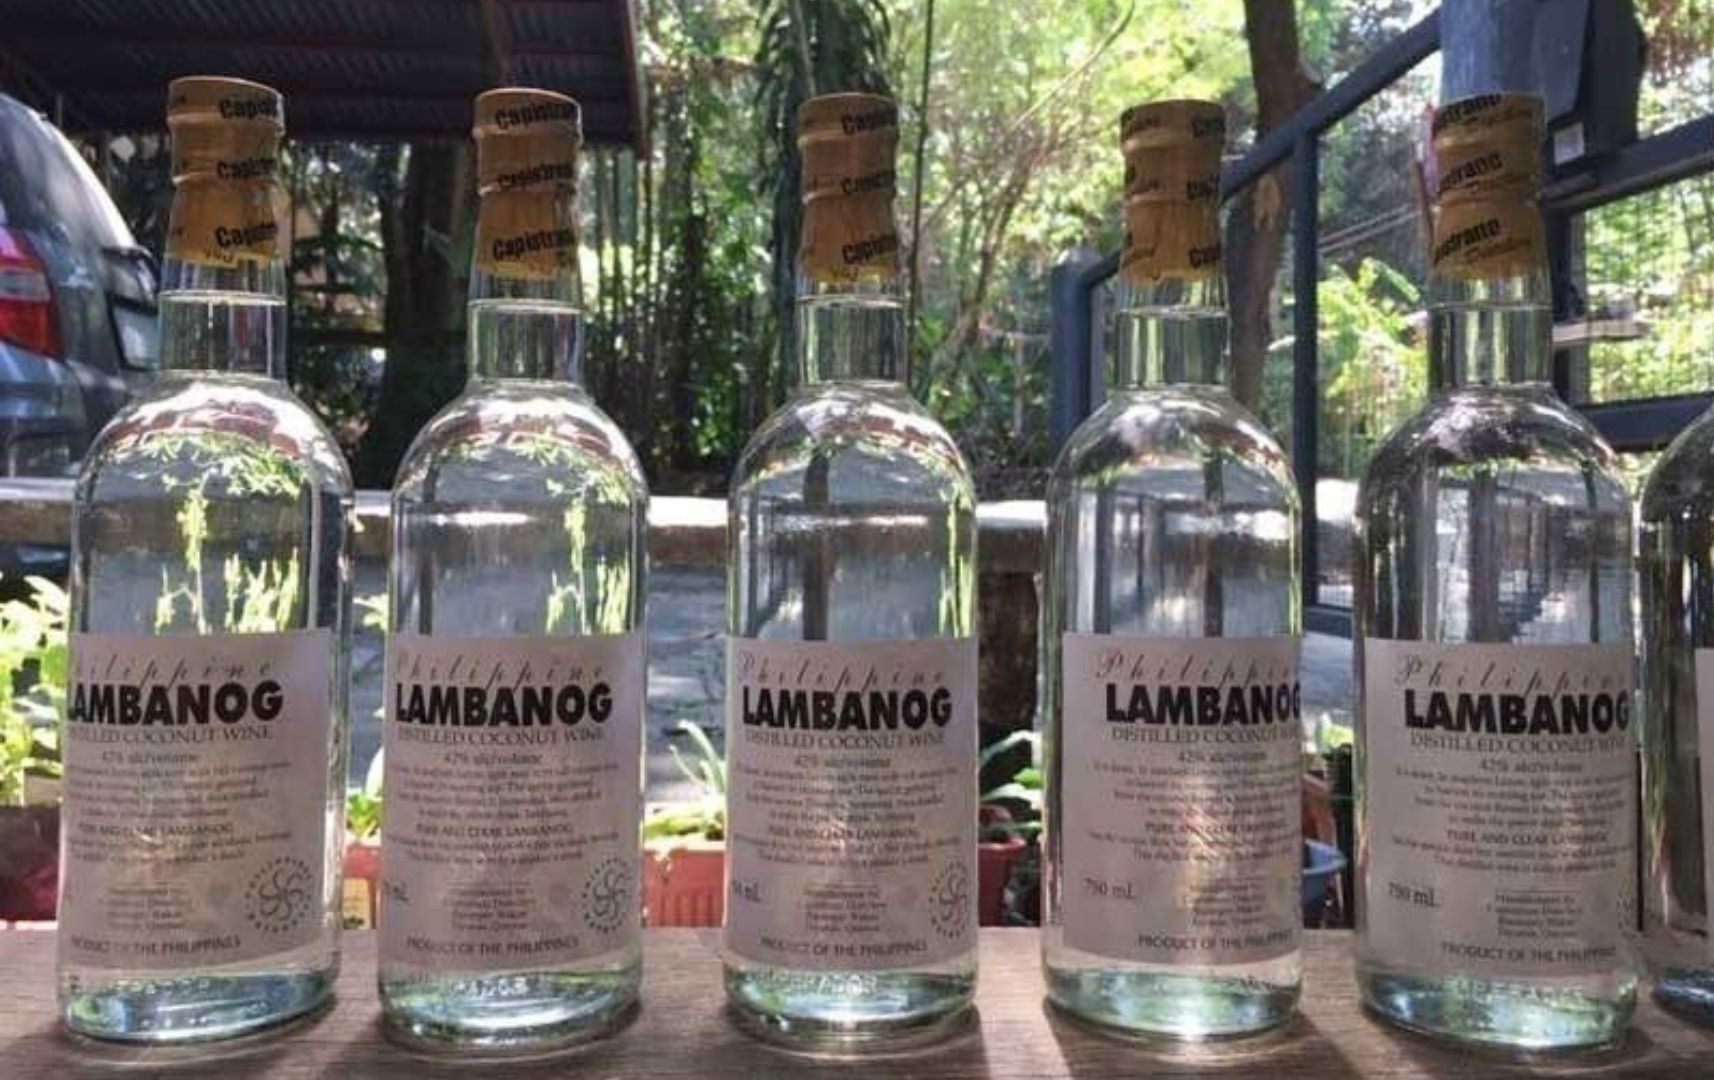 Shot puno! Lambanog second on 'top global spirits' list